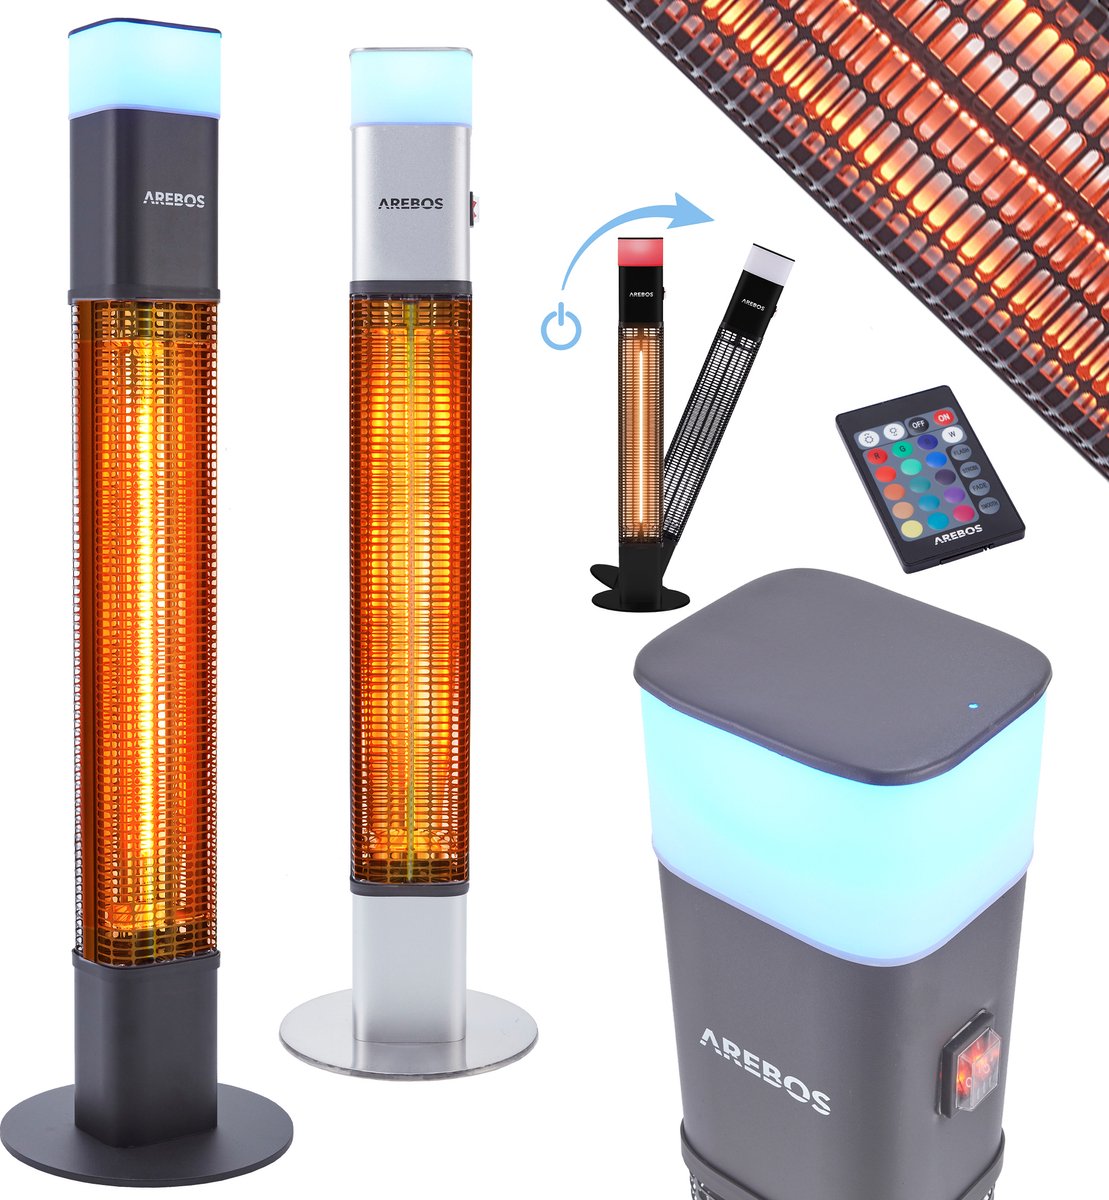 AREBOS Infrarood Verwarming - 1500W - Infrarood Kachel - Terrasverwarmer - Inclusief 16 kleuren LED lampje - met Afstandsbediening - Zwart